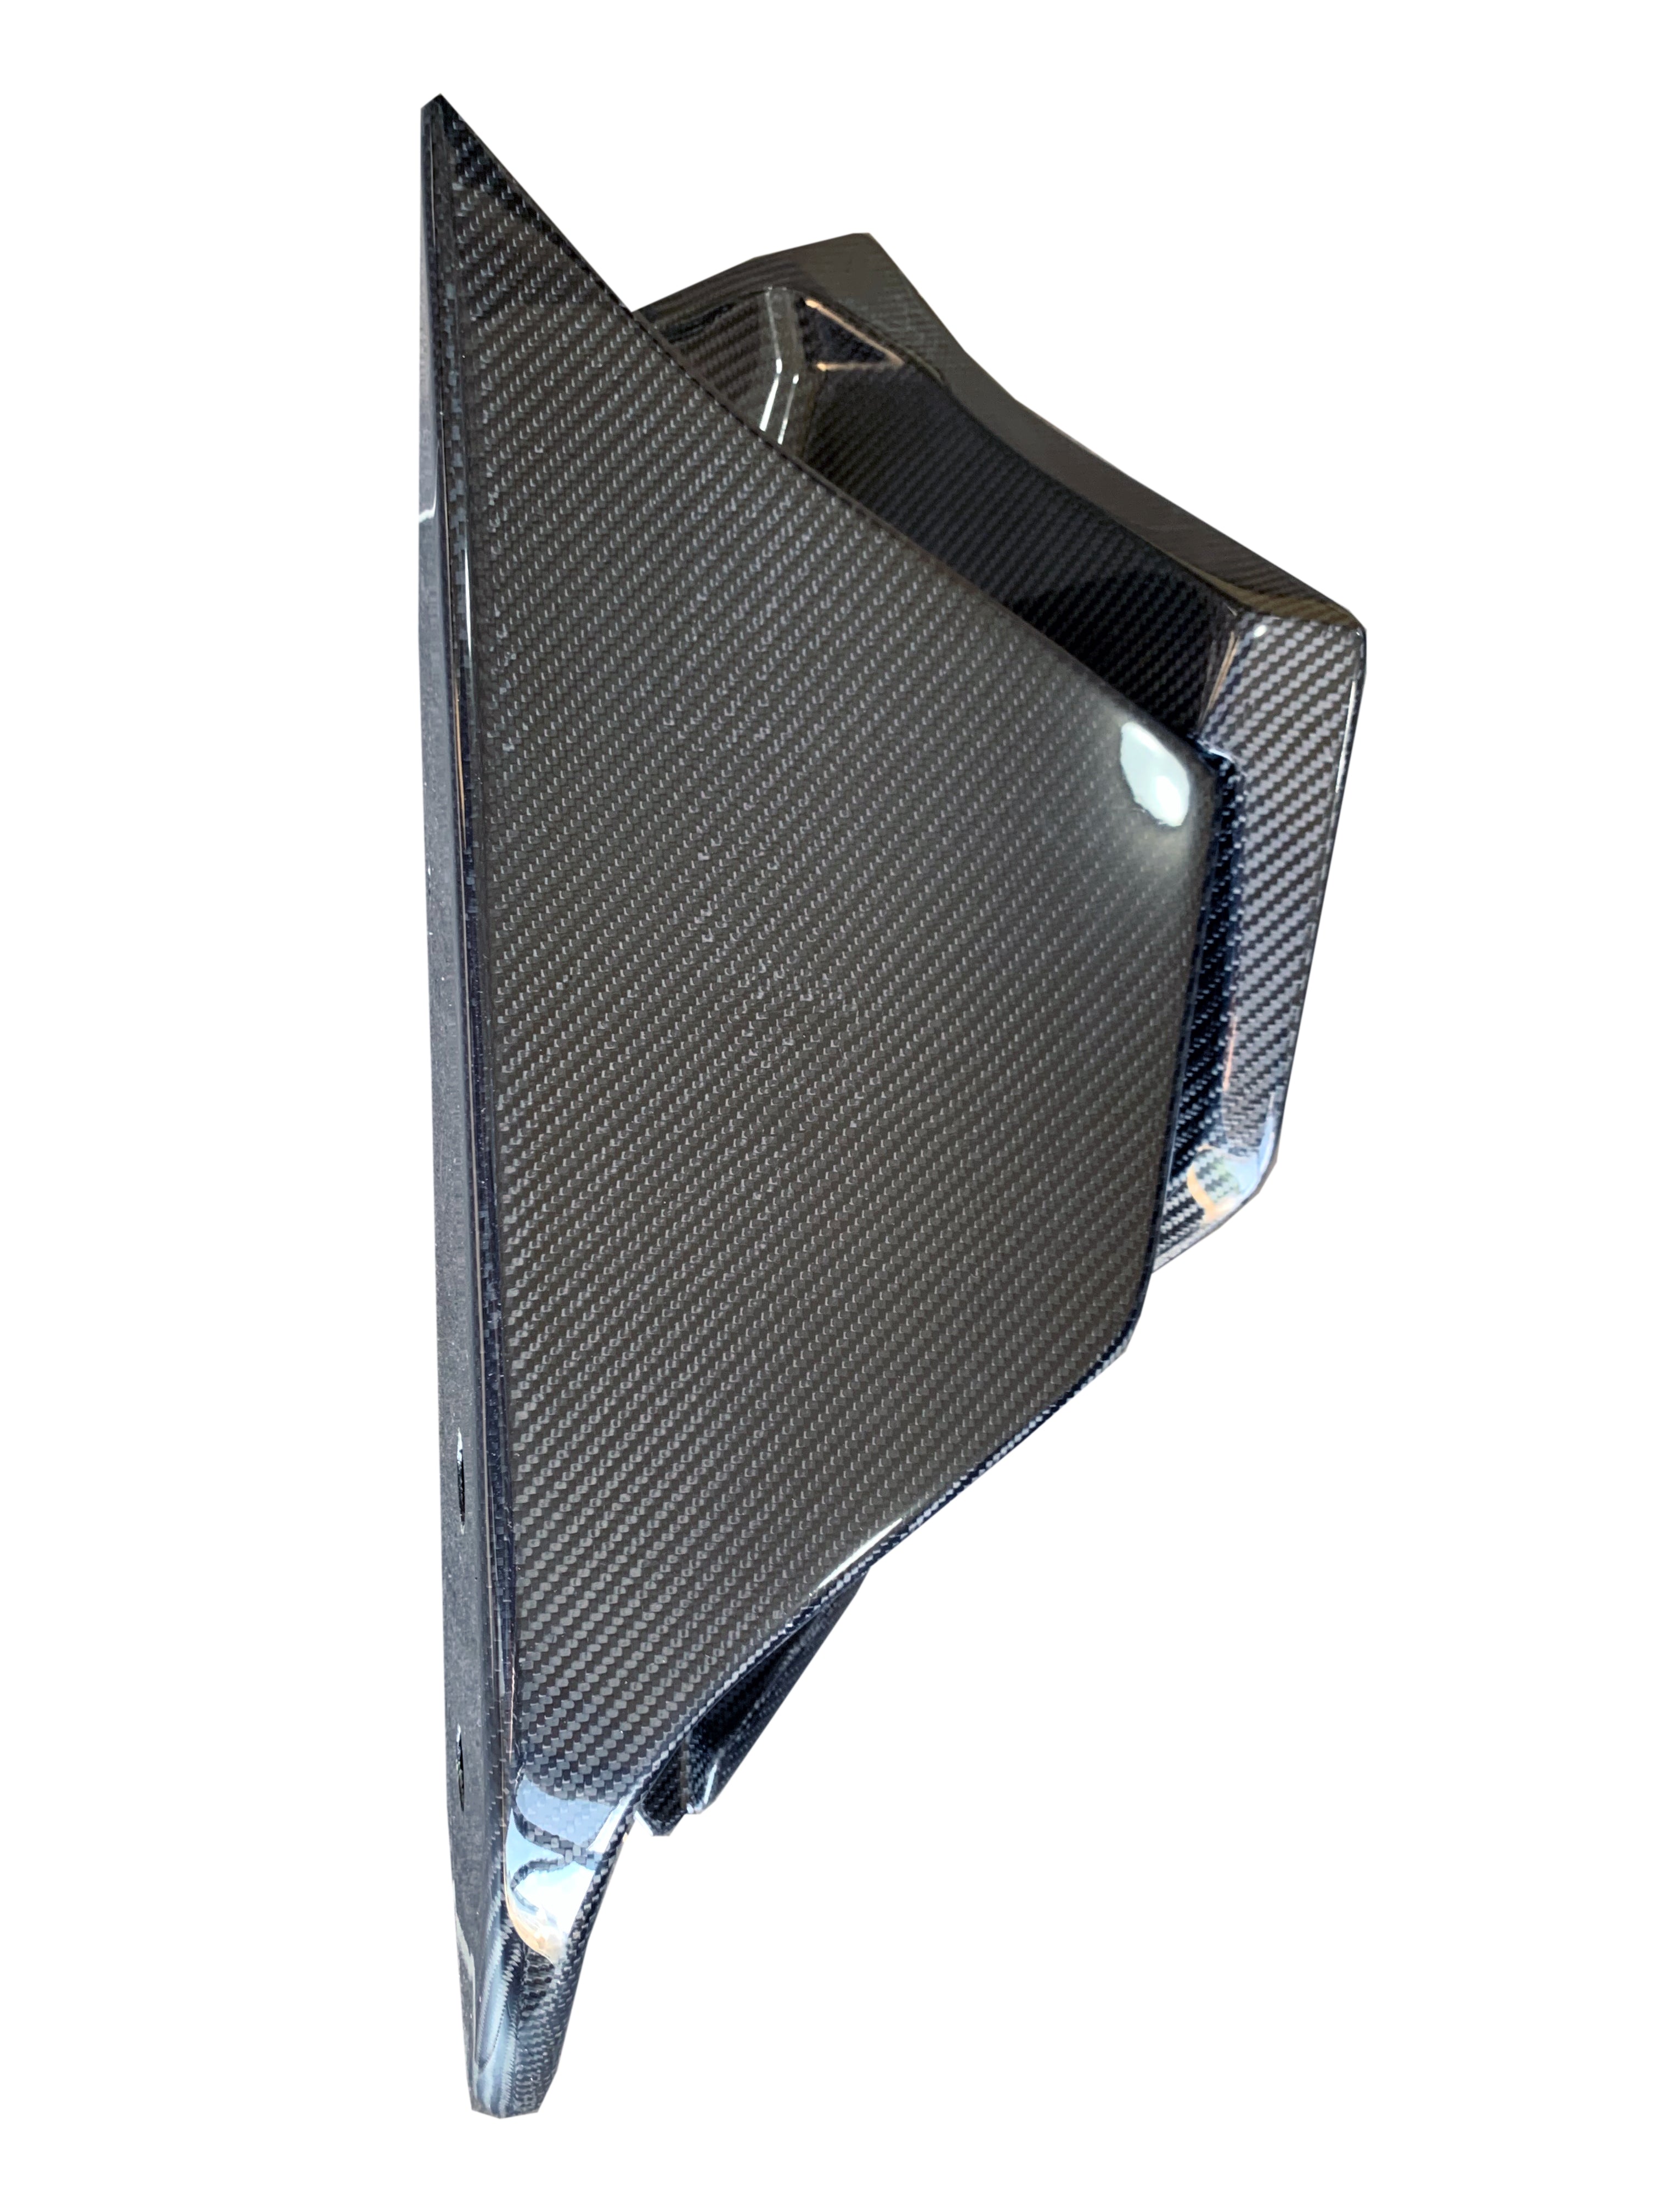 Spats laterales del parachoques trasero de fibra de carbono forjado Rexpeed V3 (MK5 Supra)